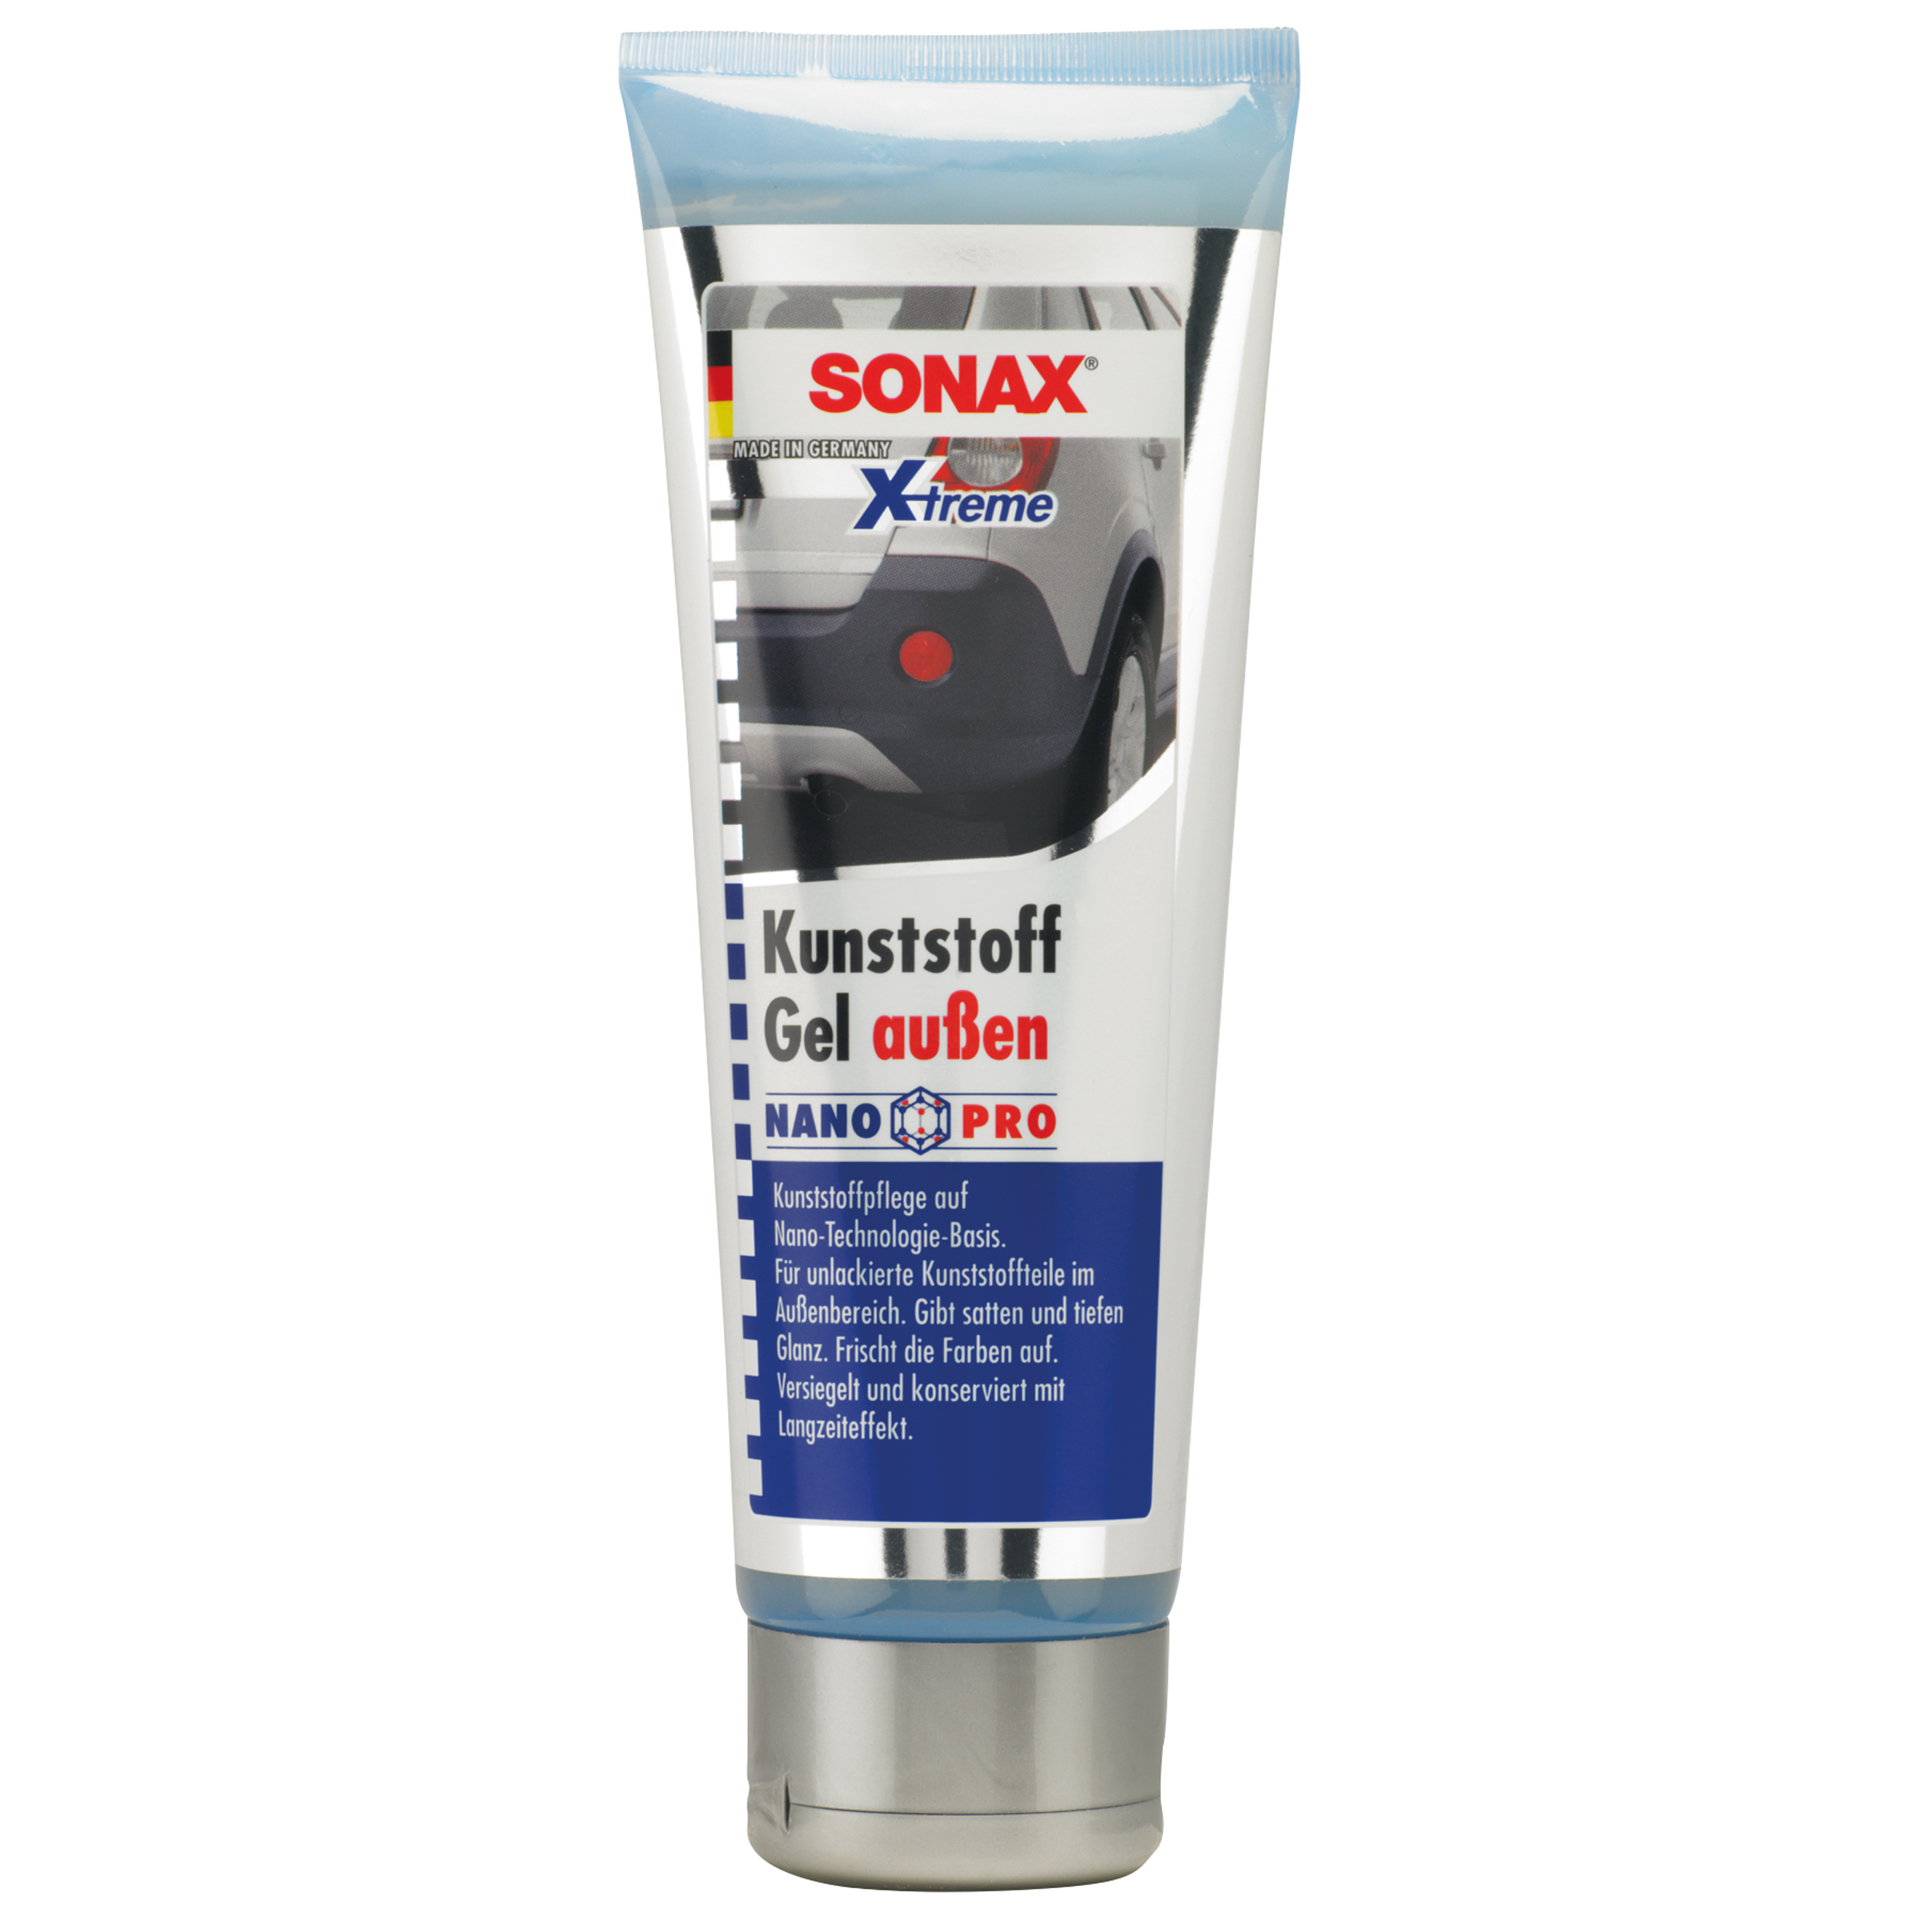 Sonax Sonax 02101410 eXtreme Kunststof gel 1837529